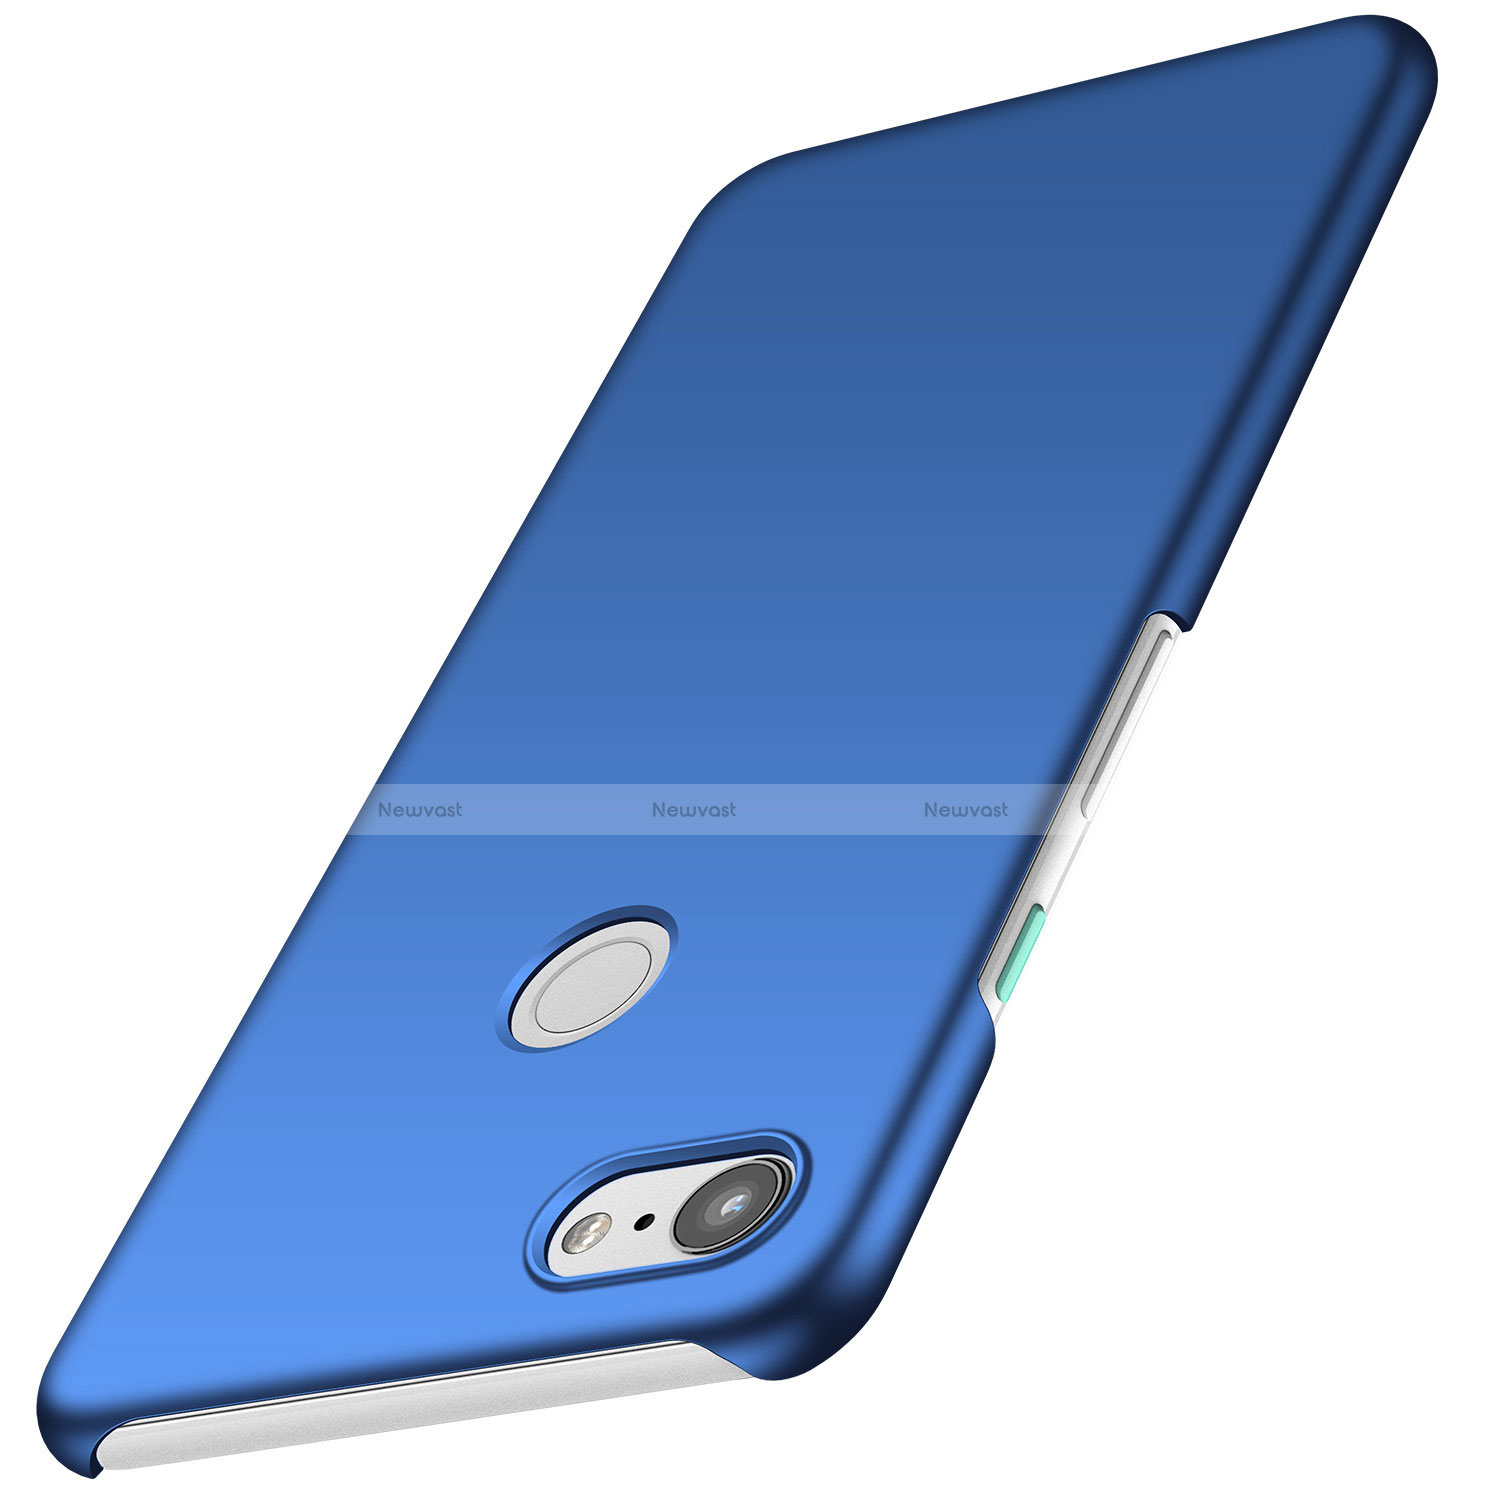 Hard Rigid Plastic Matte Finish Case Back Cover M01 for Google Pixel 3 XL Blue